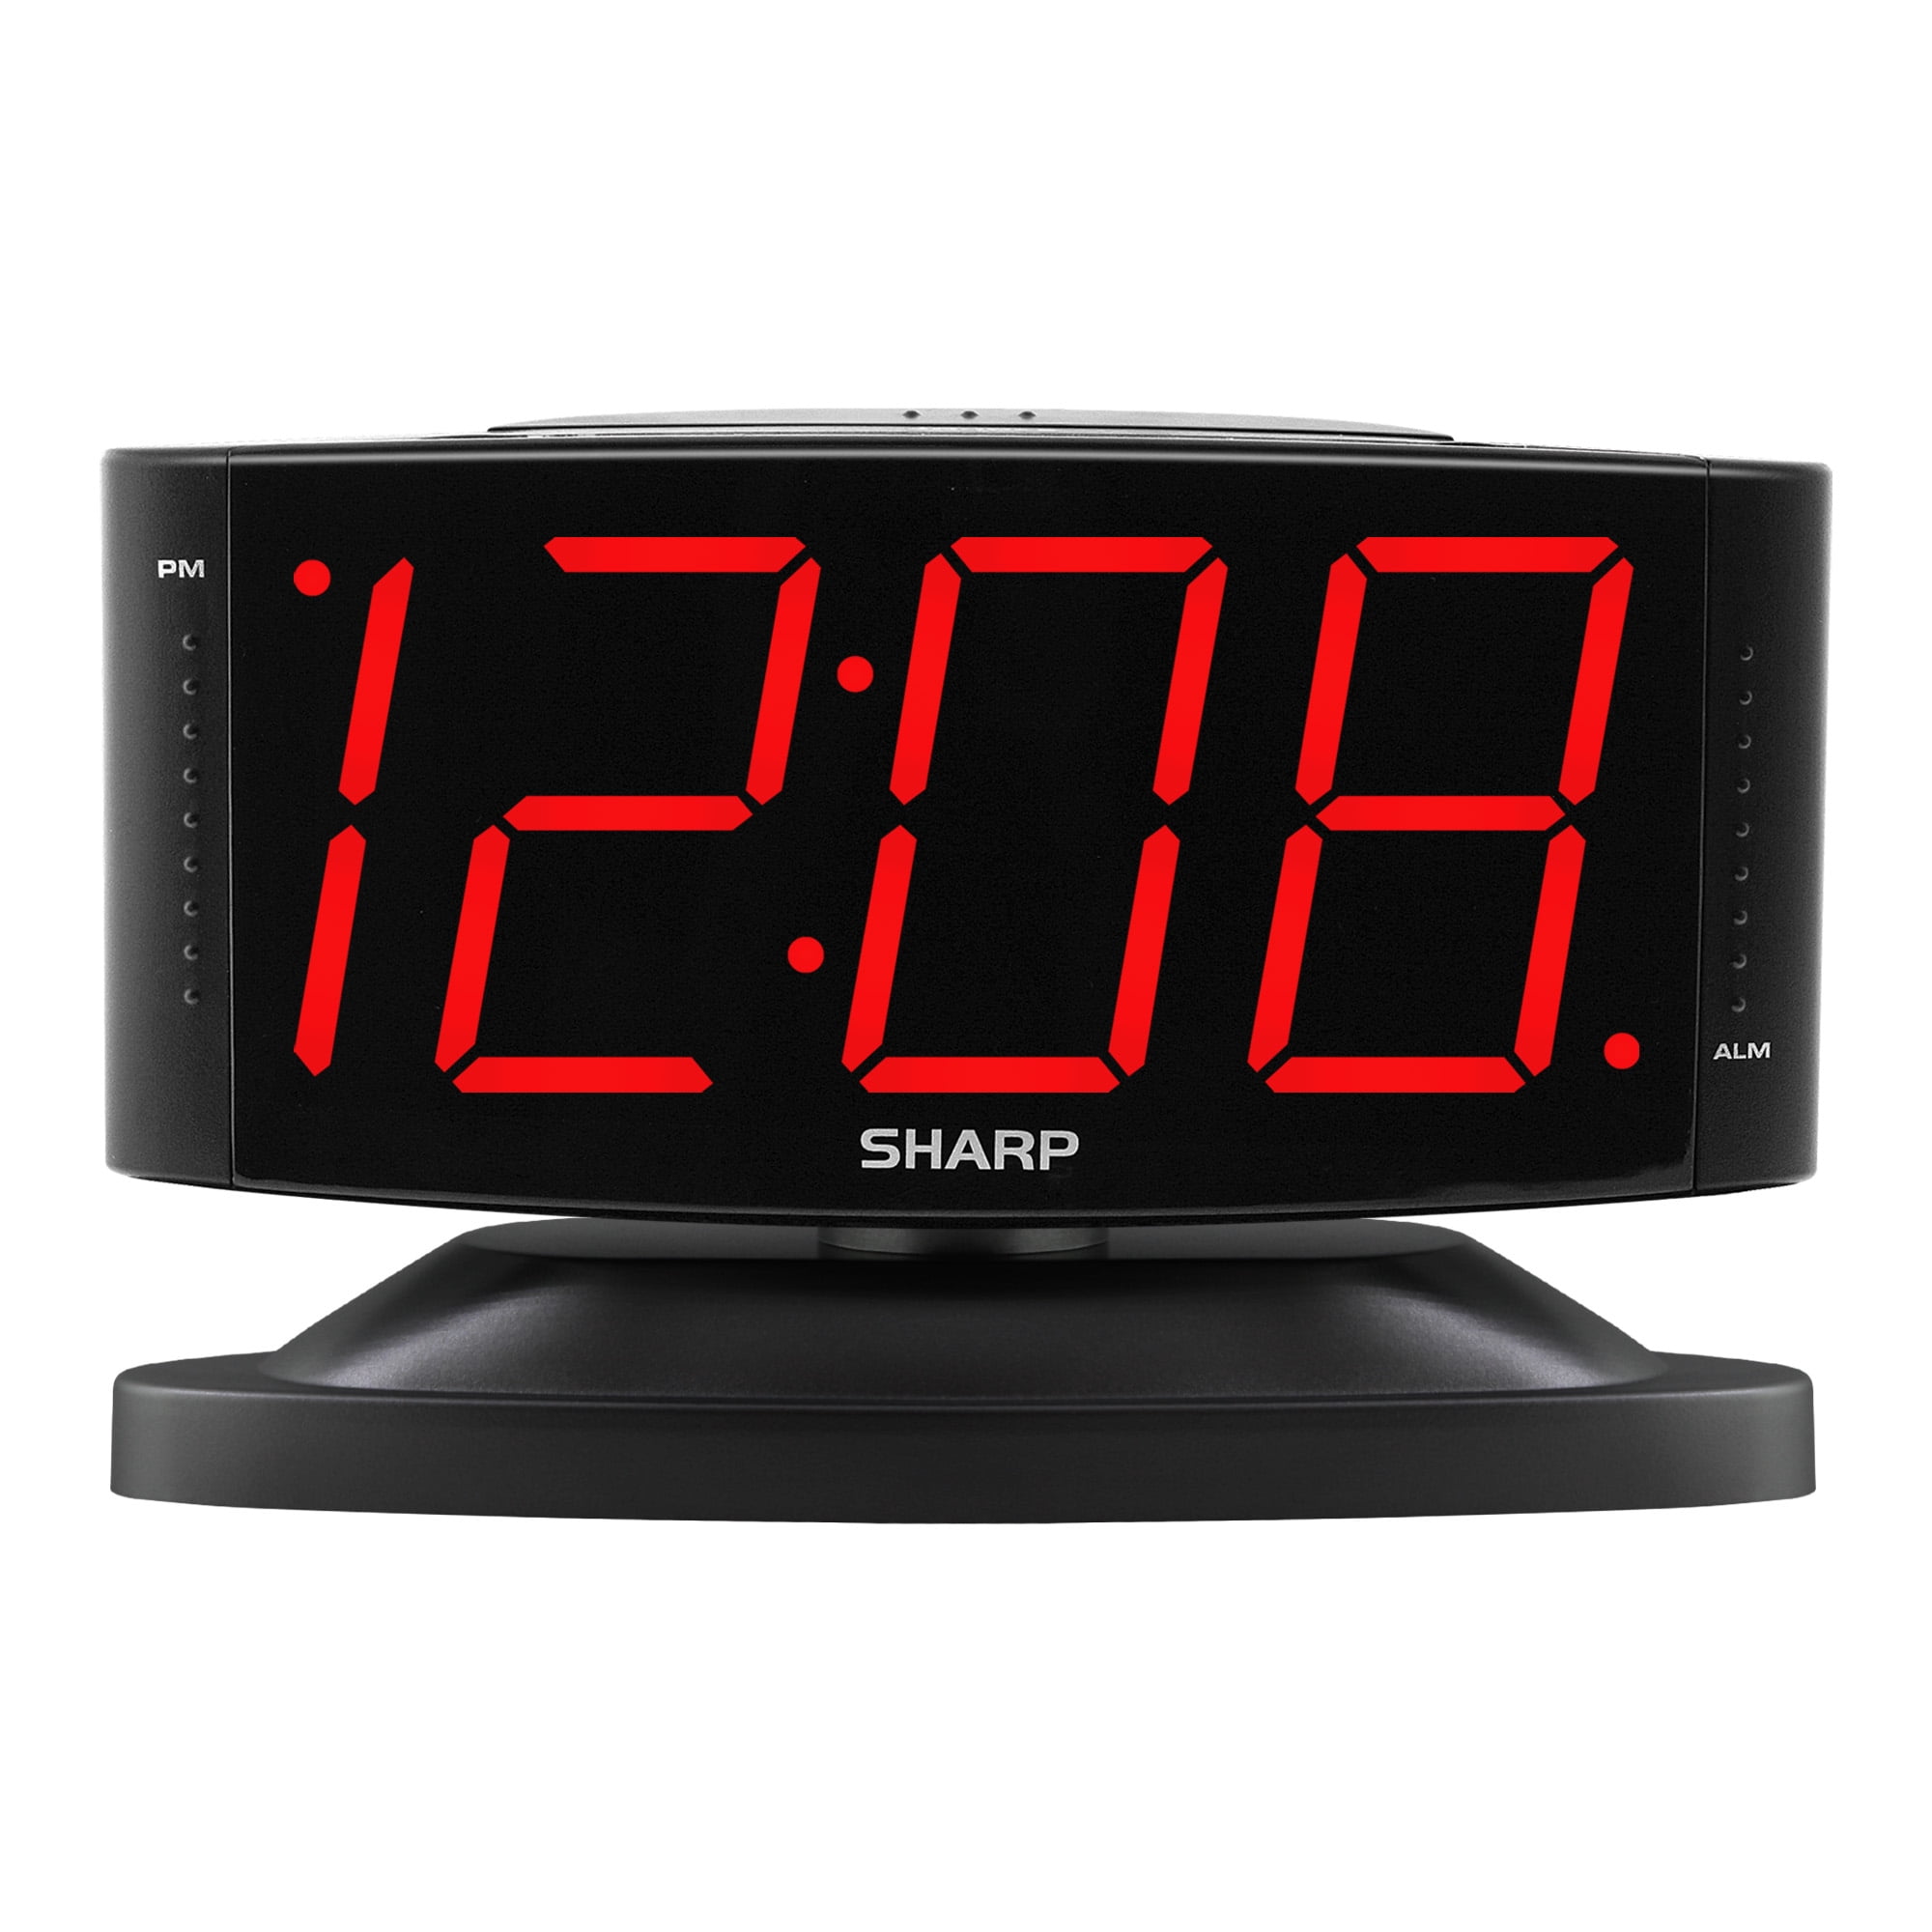 Sharp LED Digital Alarm Clock, Swivel Base, Case, Red Display, SPC033A - Walmart.com